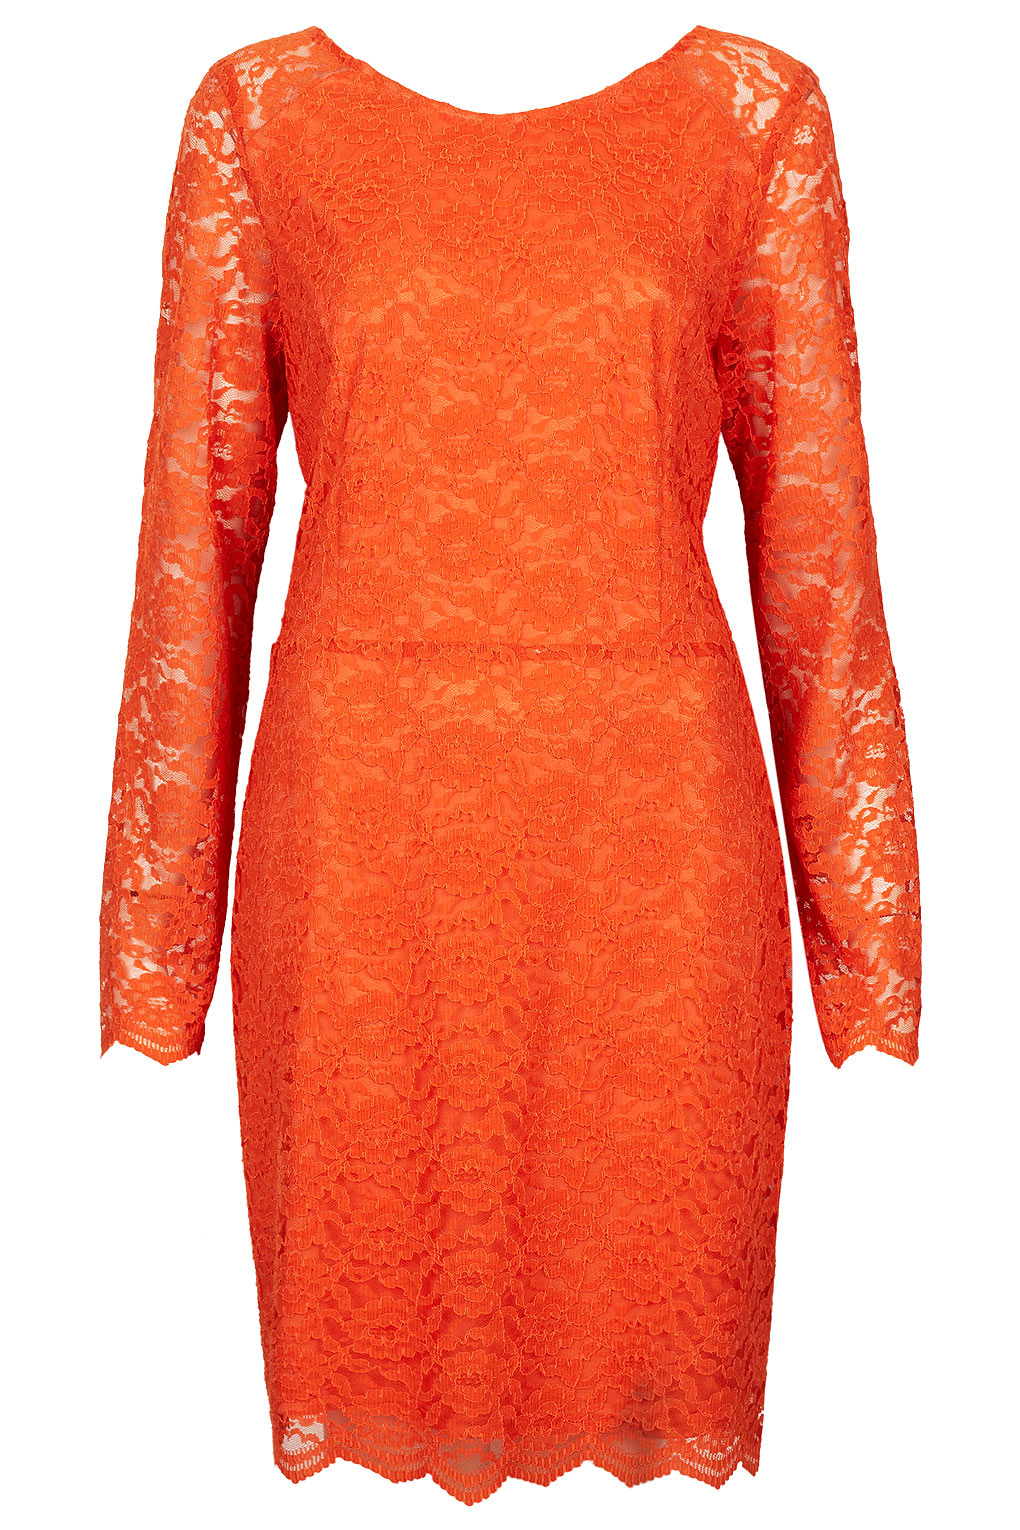 Topshop Lace Loop Back Dress in Orange | Lyst